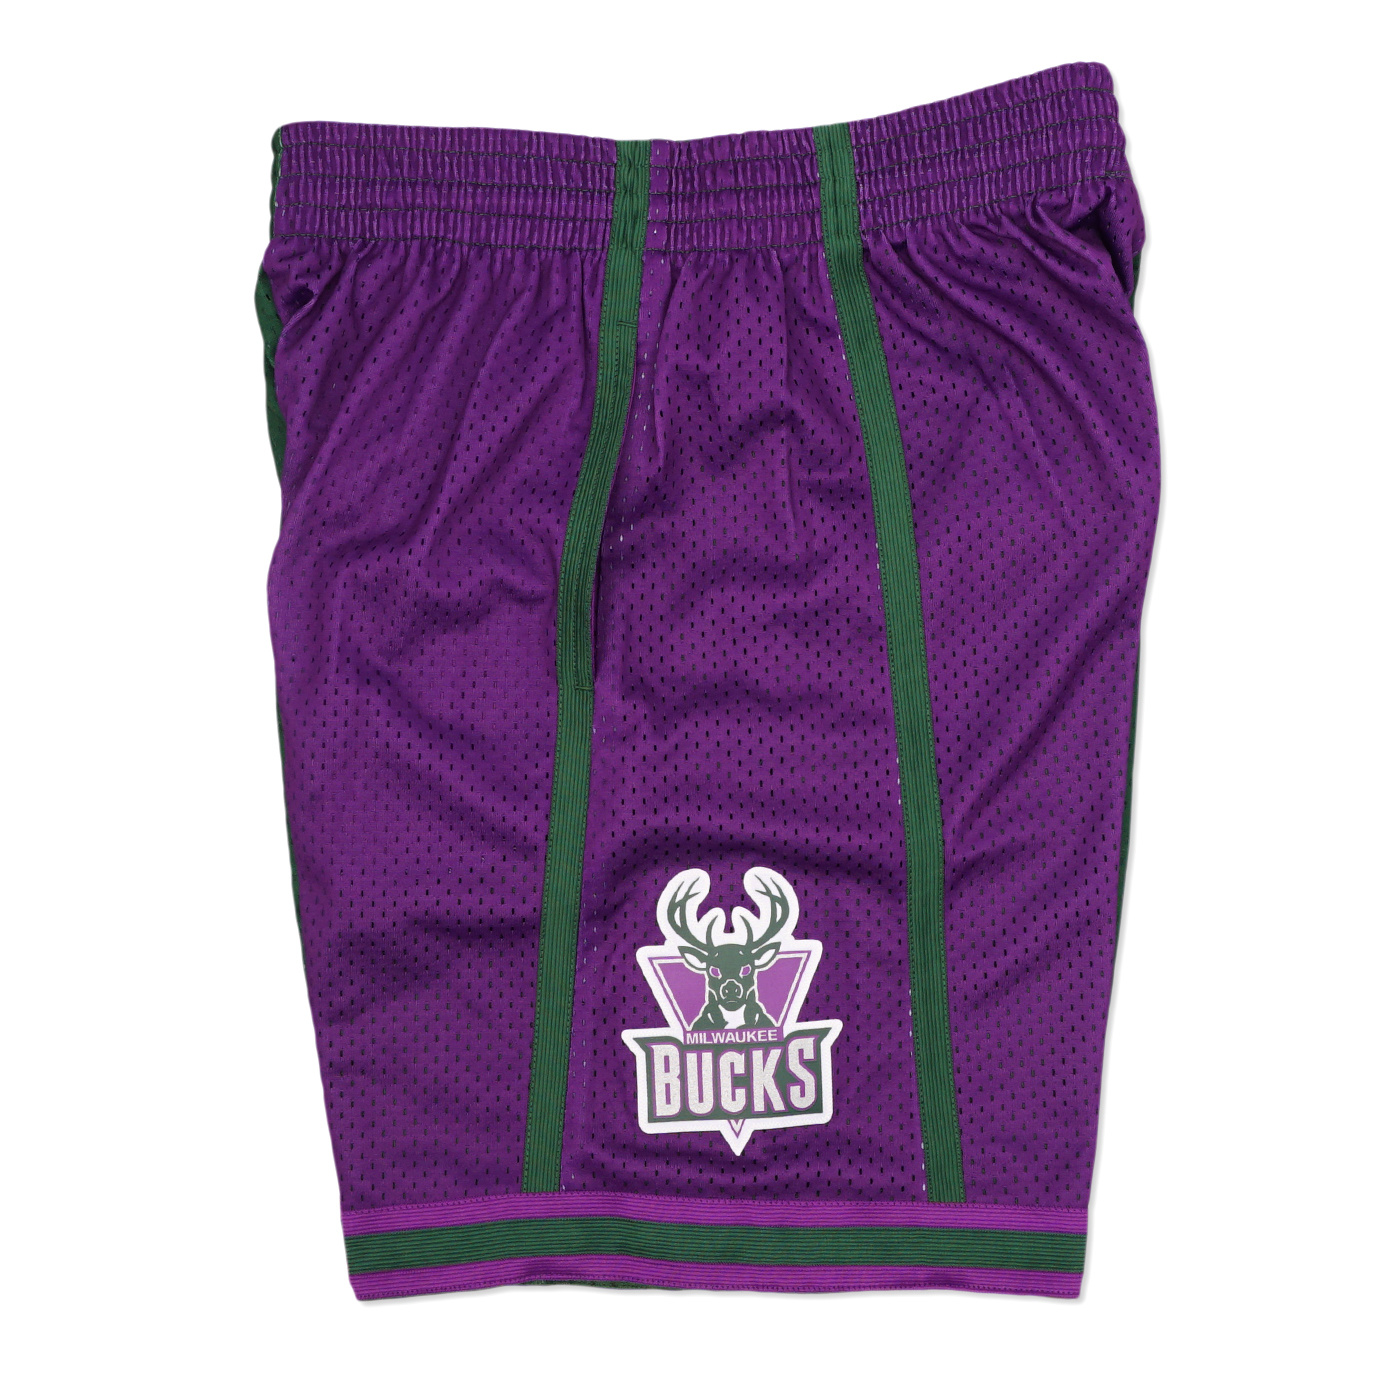 Mitchell & Ness Men's Milwaukee Bucks Swingman Shorts - Purple/Green